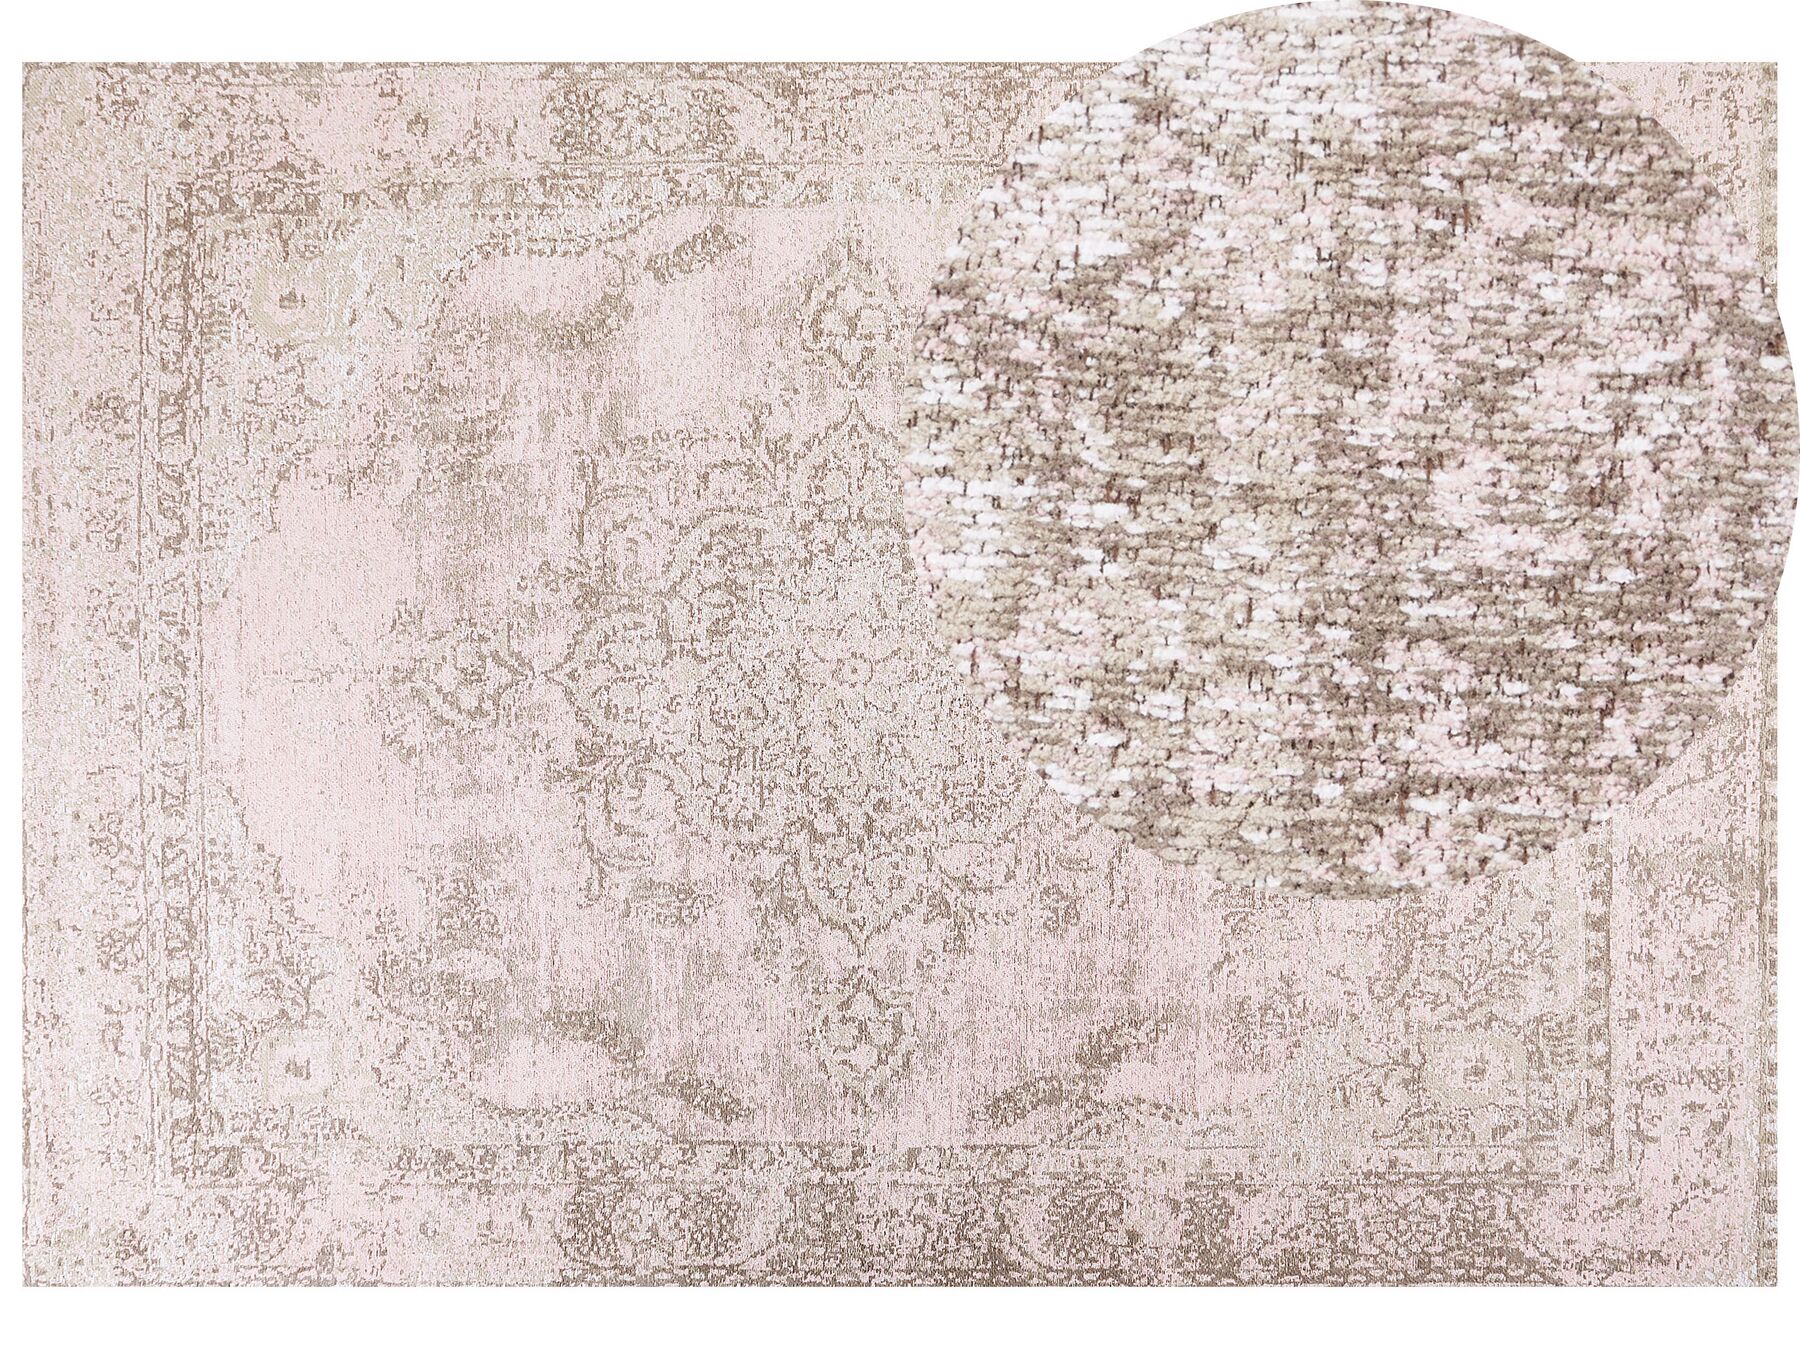 Bavlněný koberec 160 x 230 cm růžový MATARIM_852540